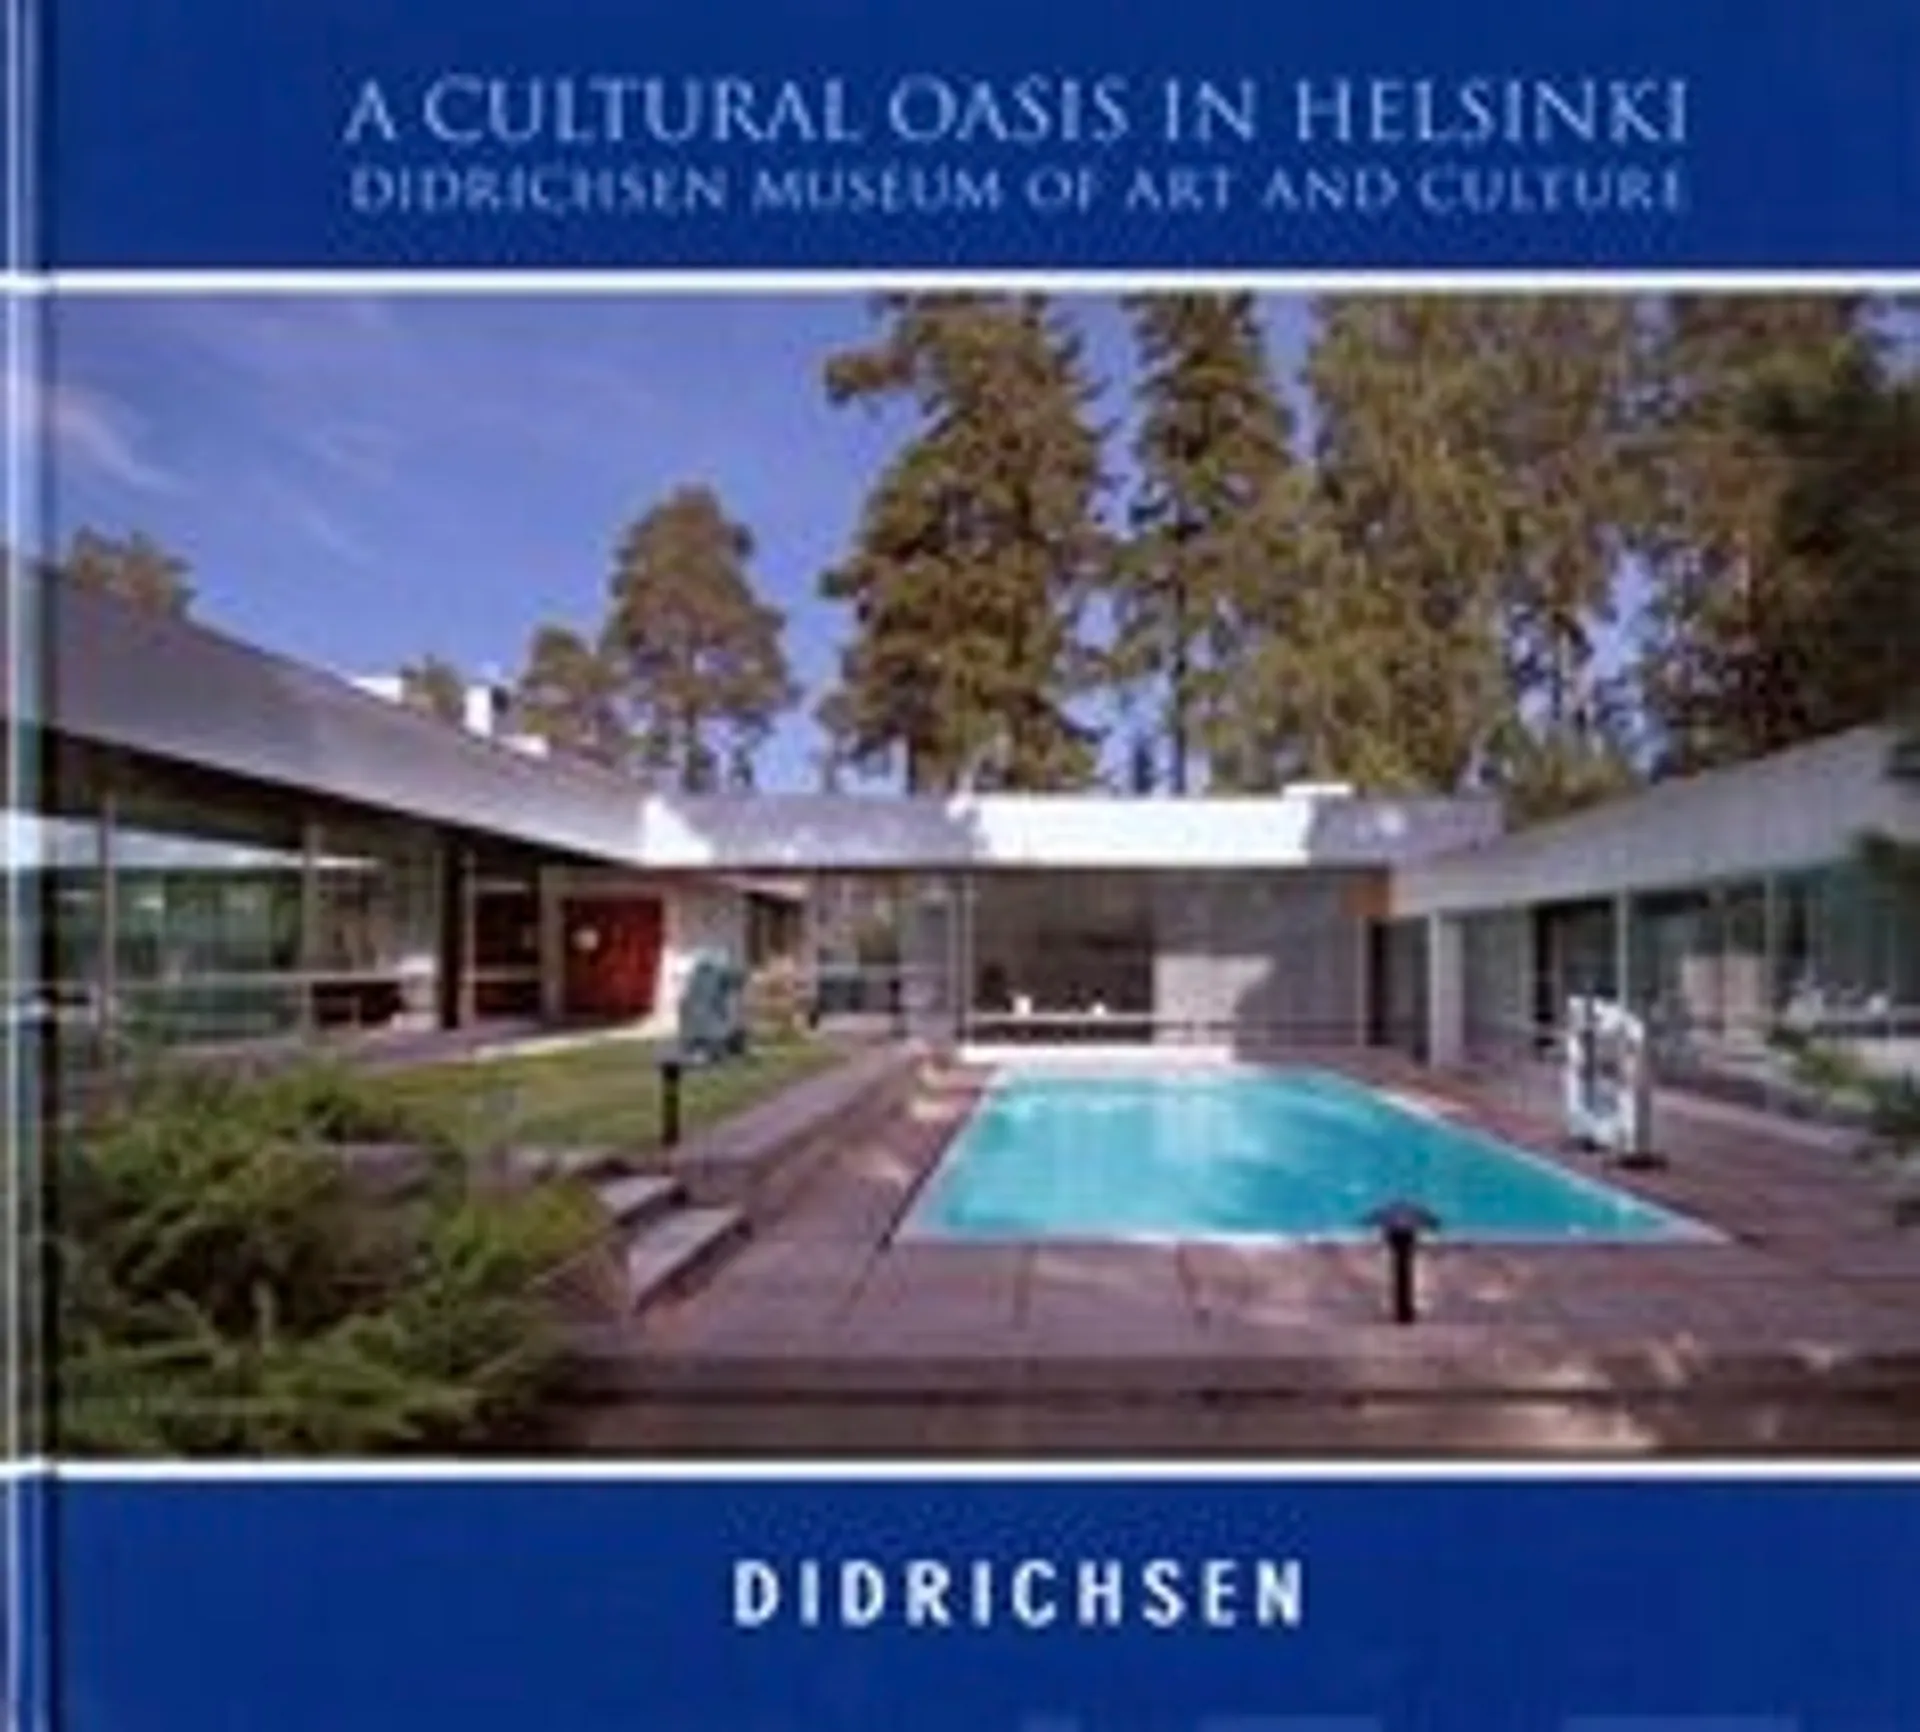 Didrichsen, A cultural oasis in Helsinki